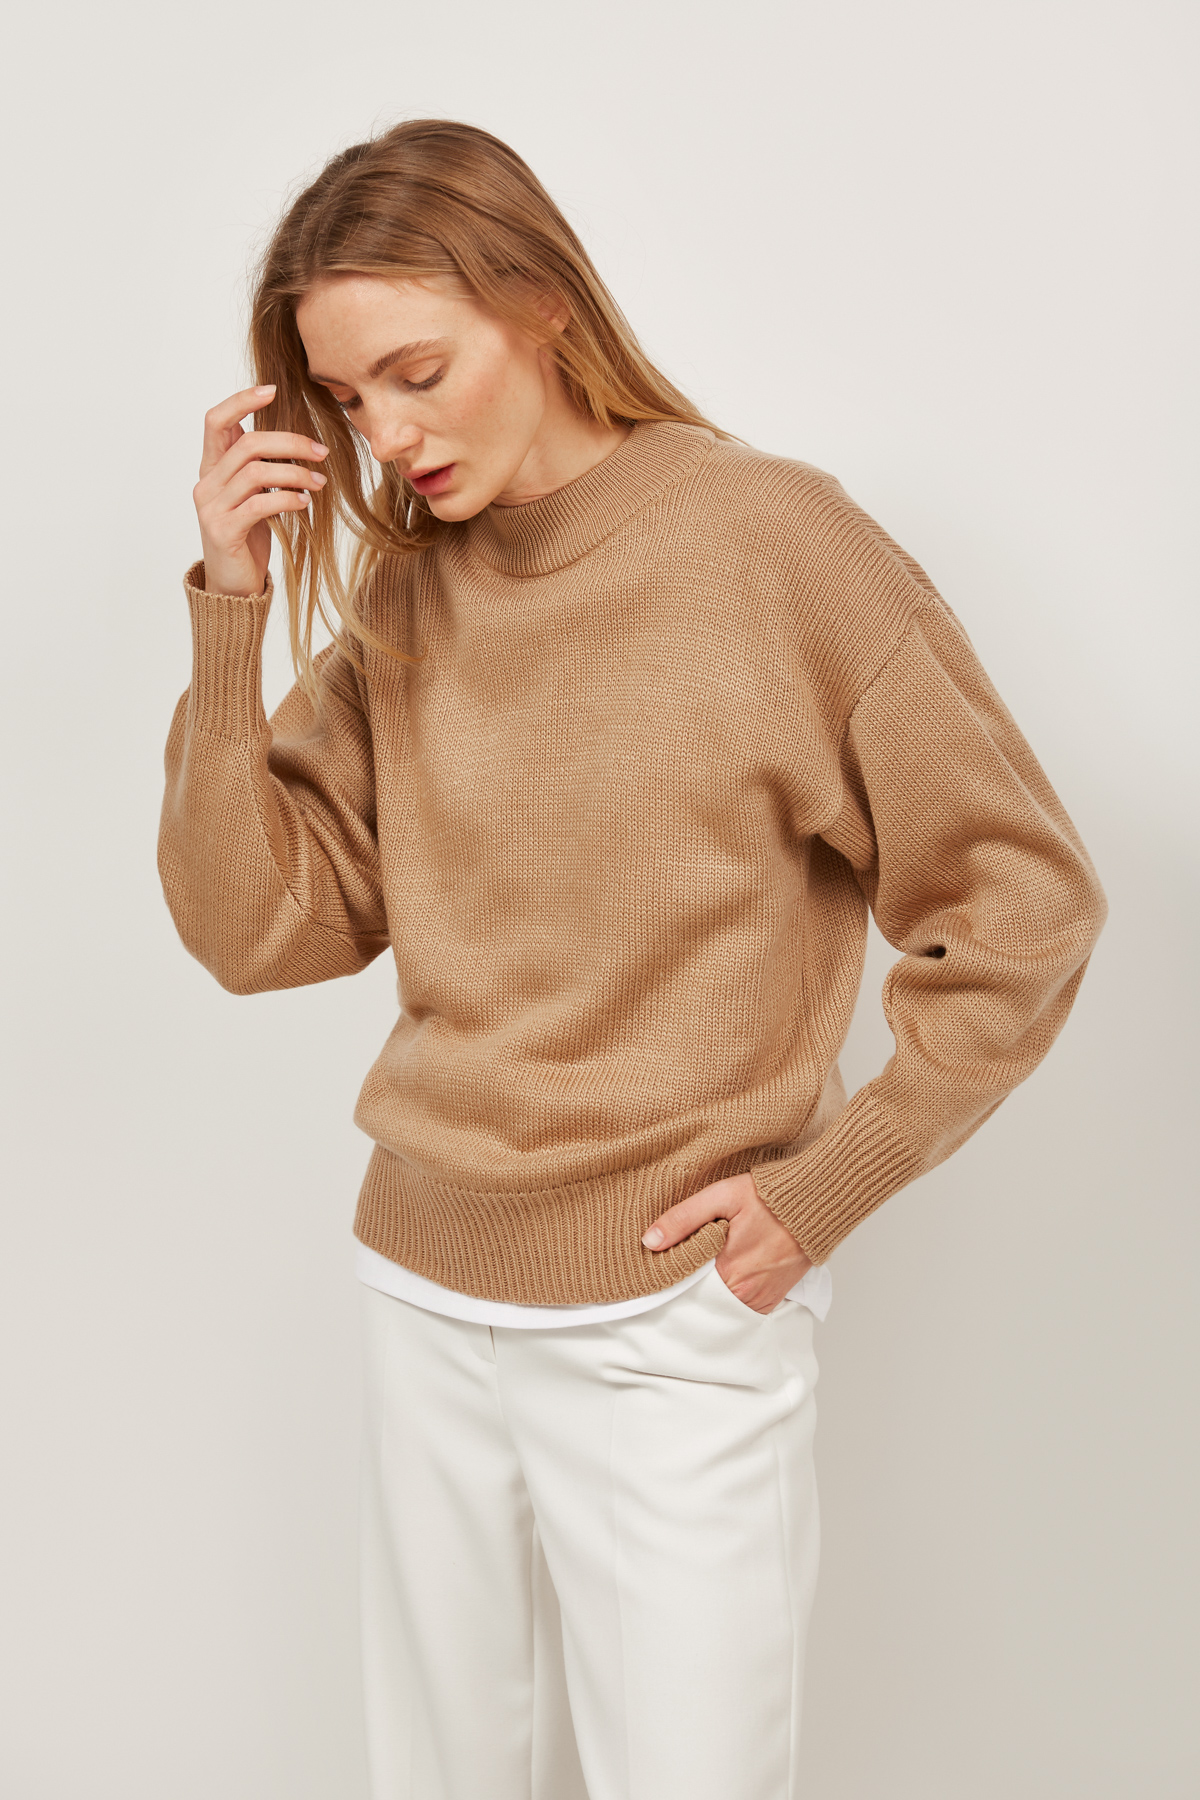 Beige knit sweater, photo 3